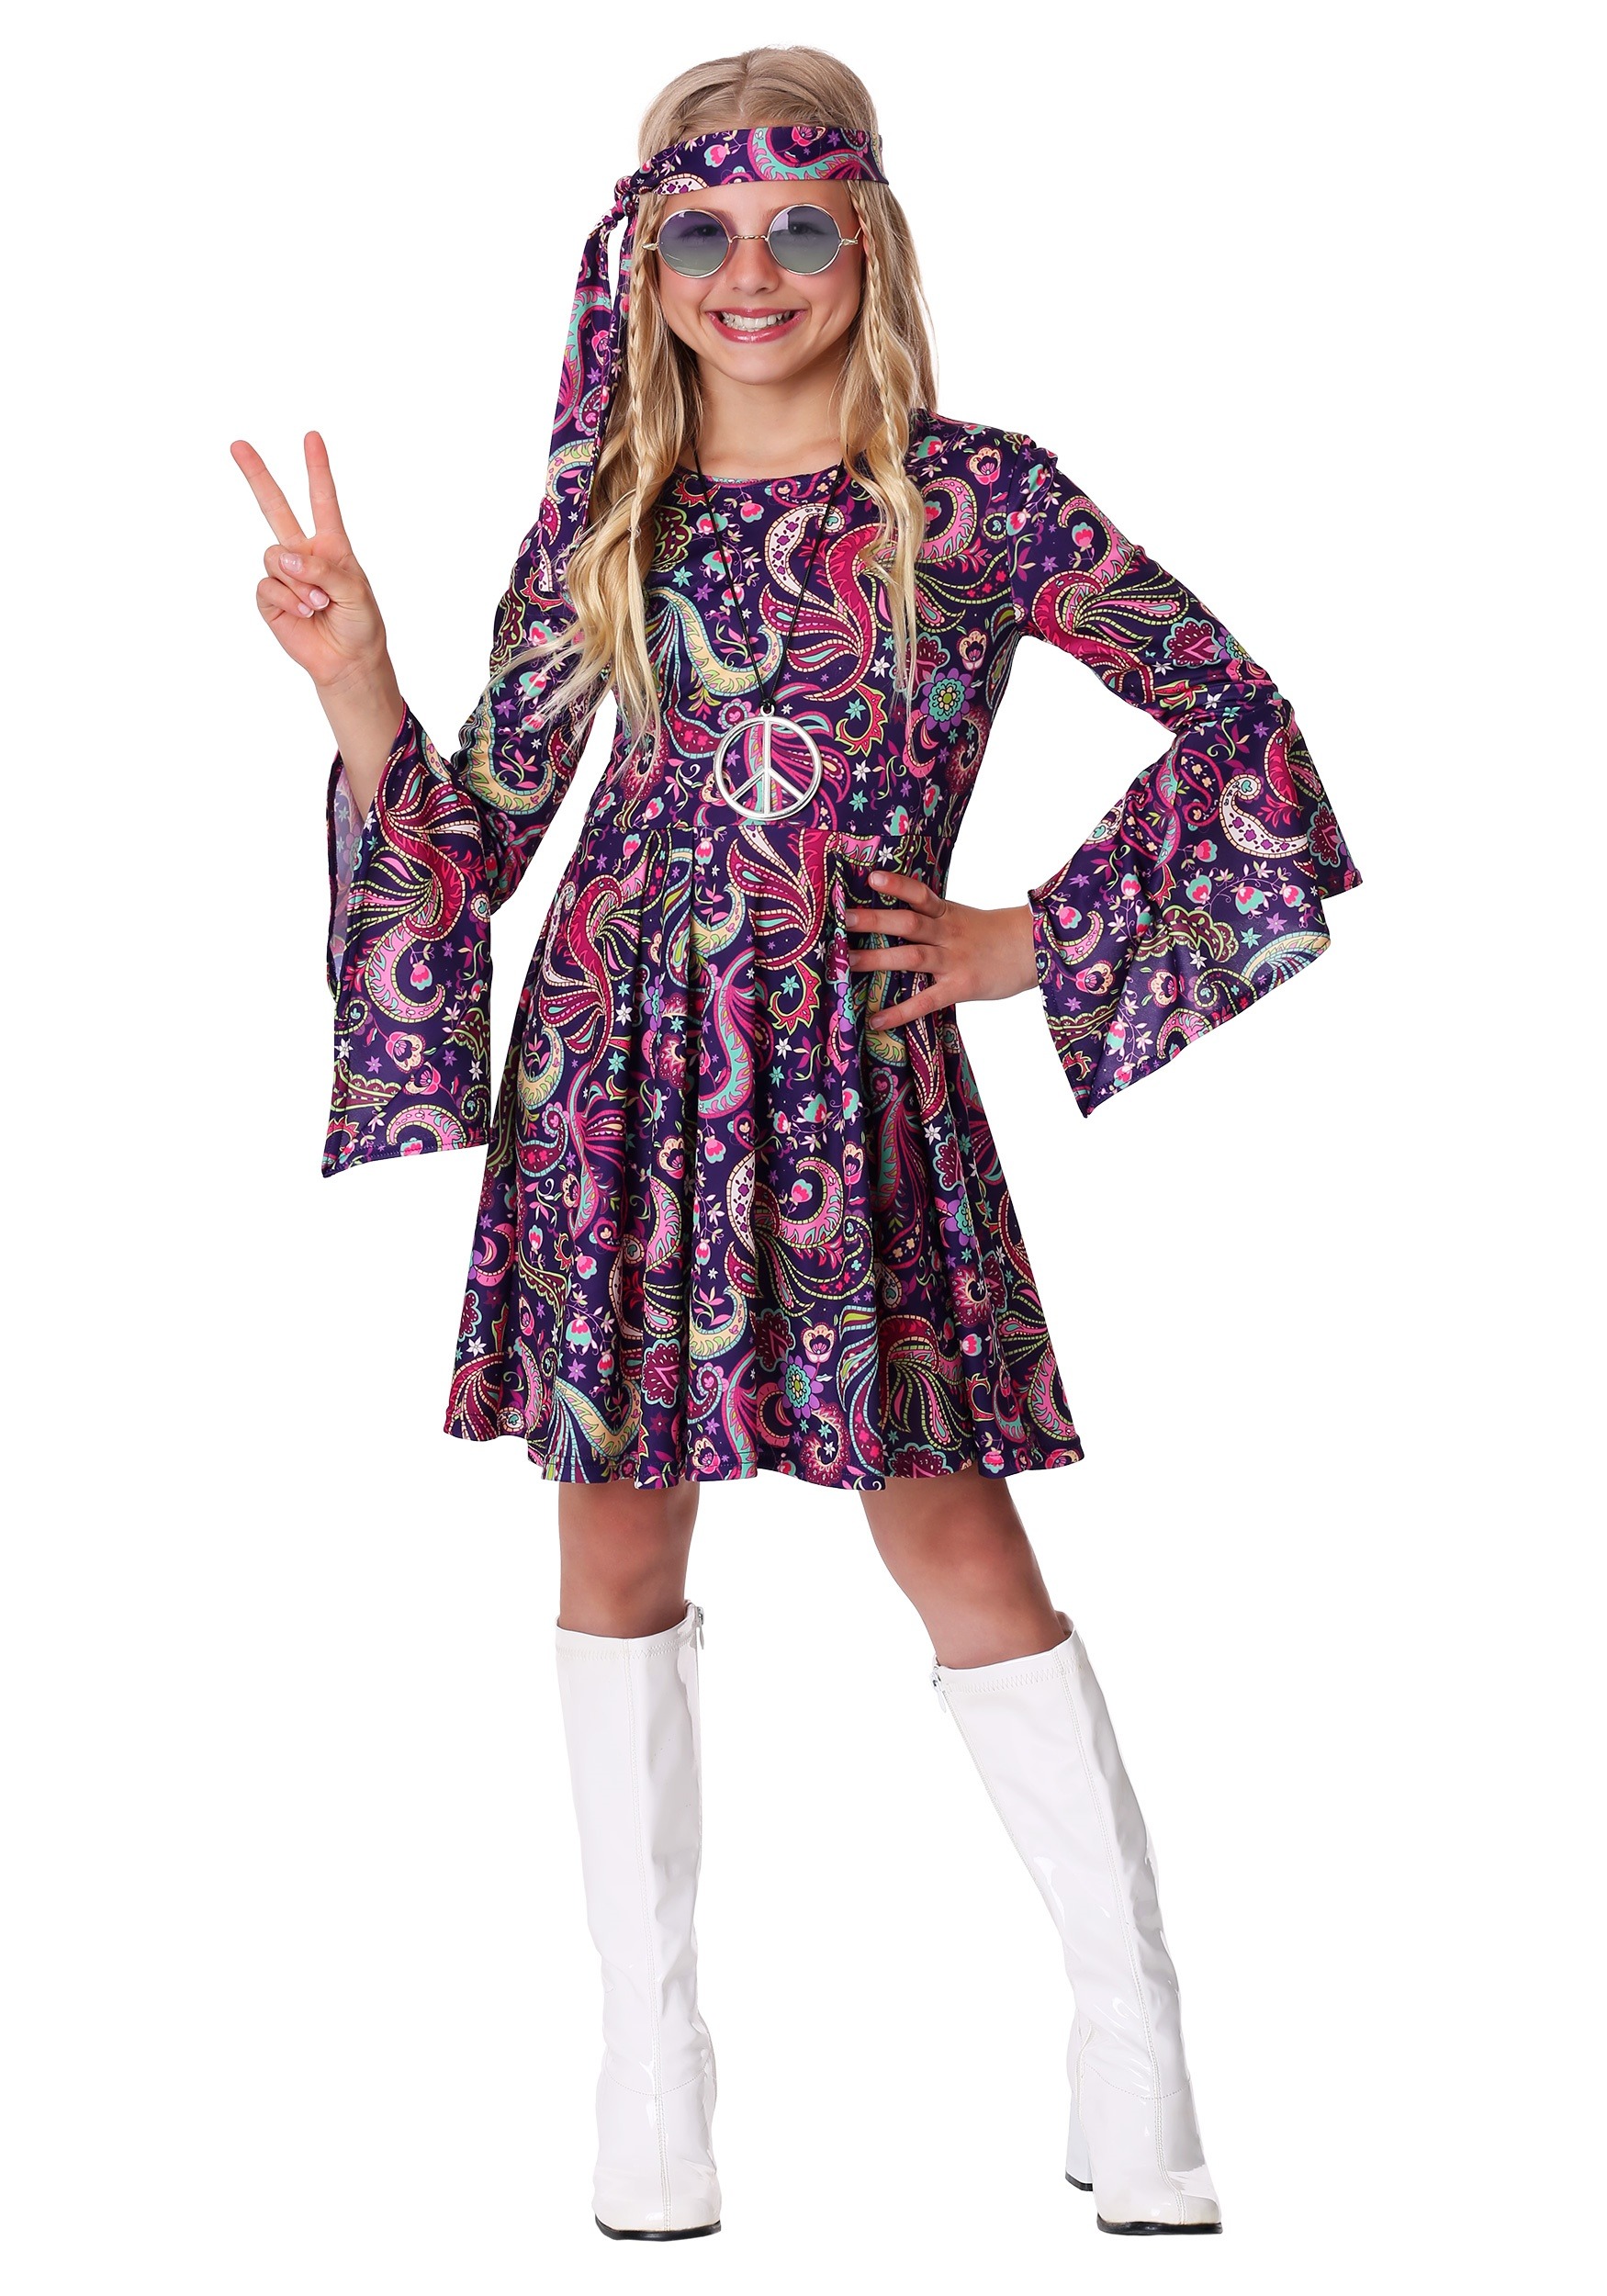 Hippie girl costume